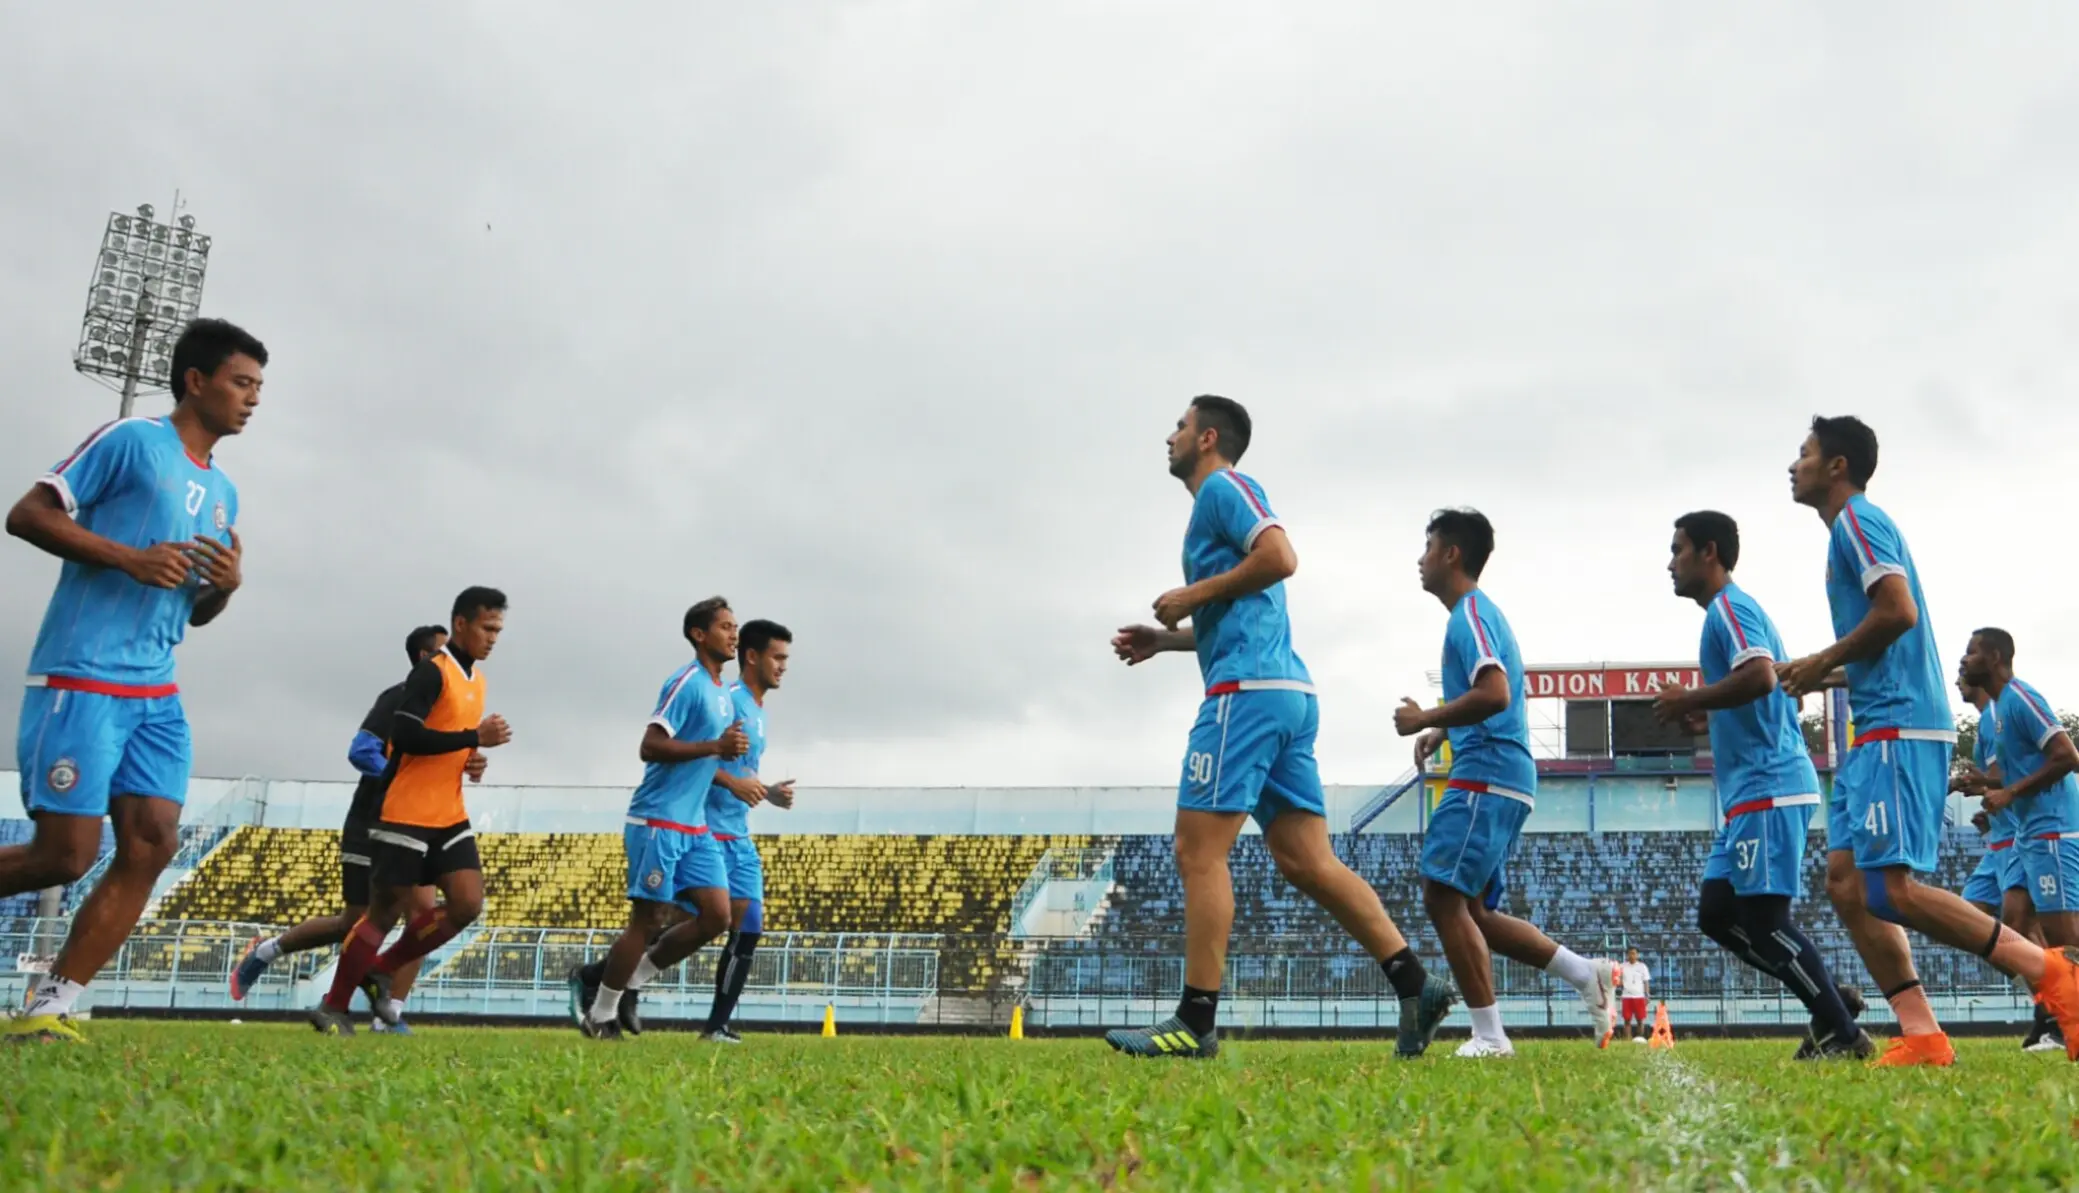 Pemain Arema FC menjalani tes fisik setelah libur Idulfitri. (Bola.com/Iwan Setiawan)